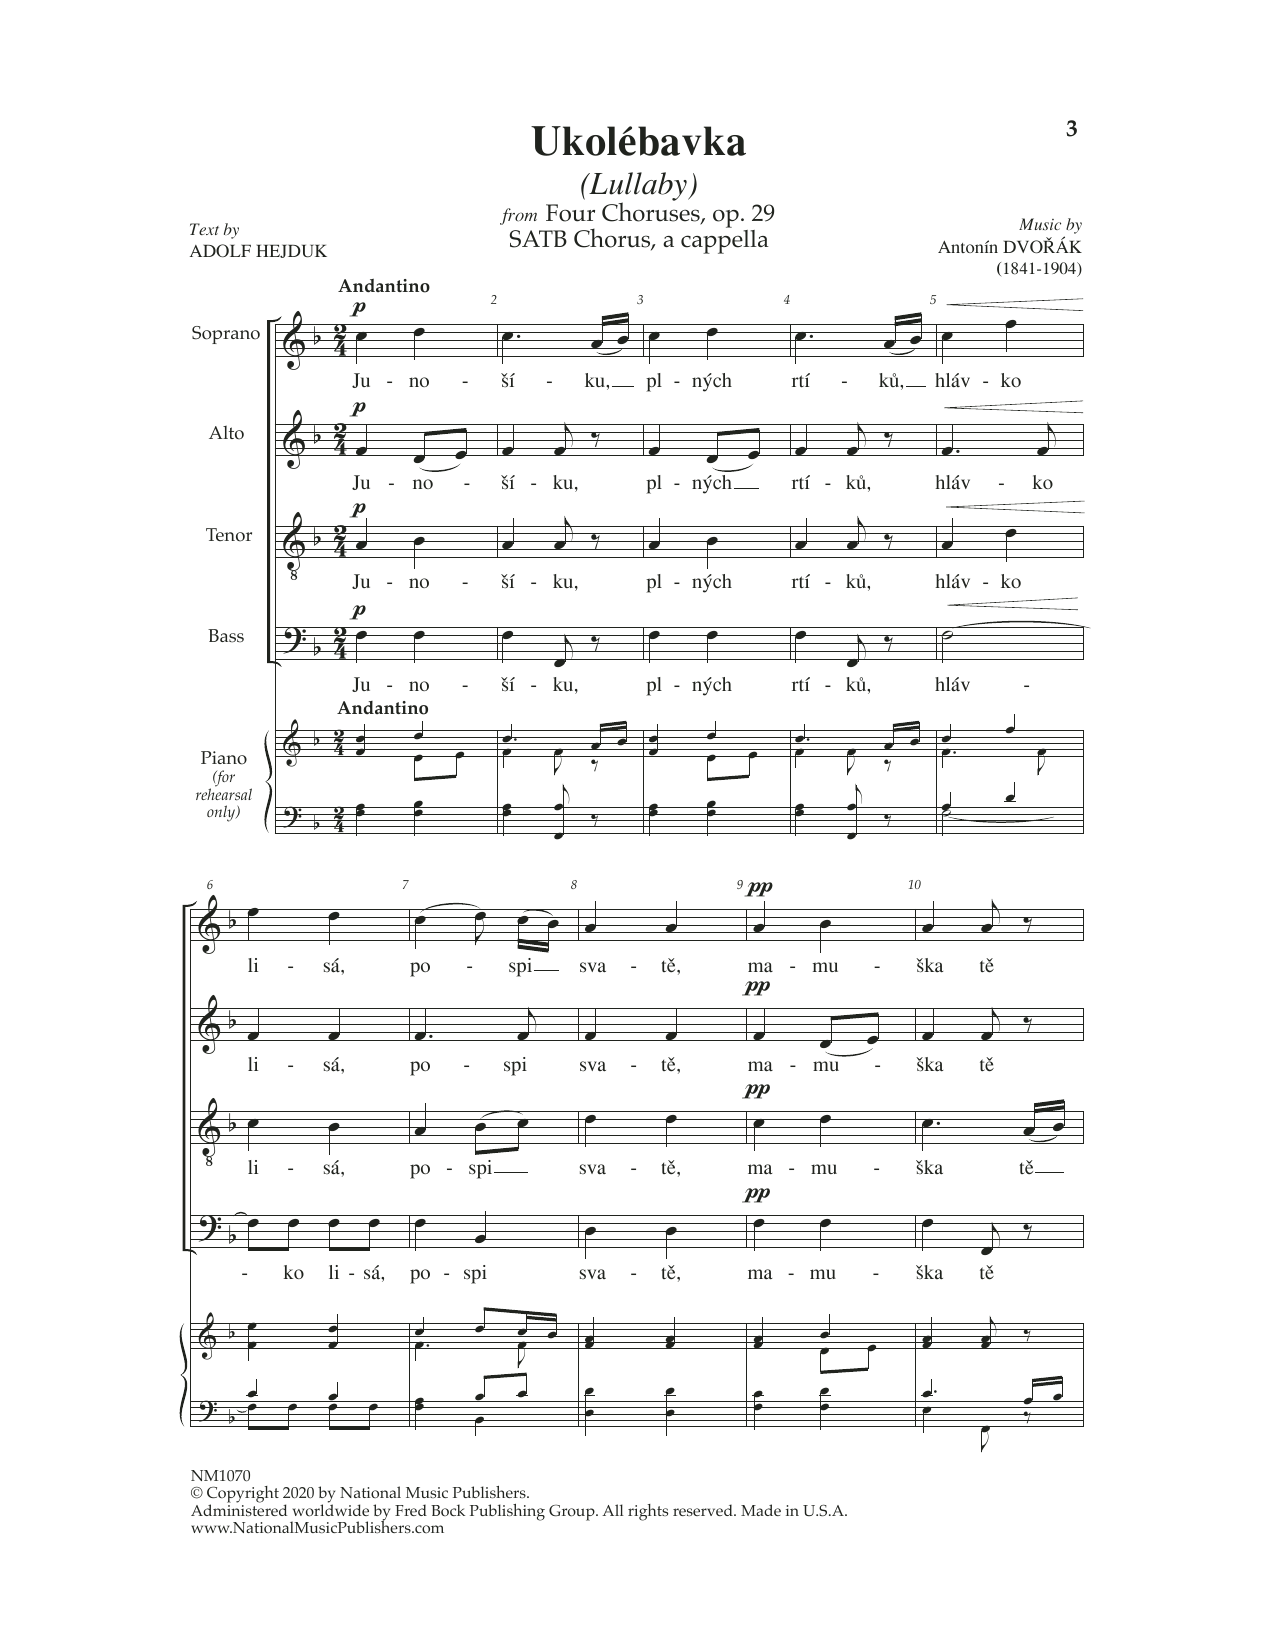 Download Antonin Dvorák Ukolebavka (Lullaby) Sheet Music and learn how to play SATB Choir PDF digital score in minutes